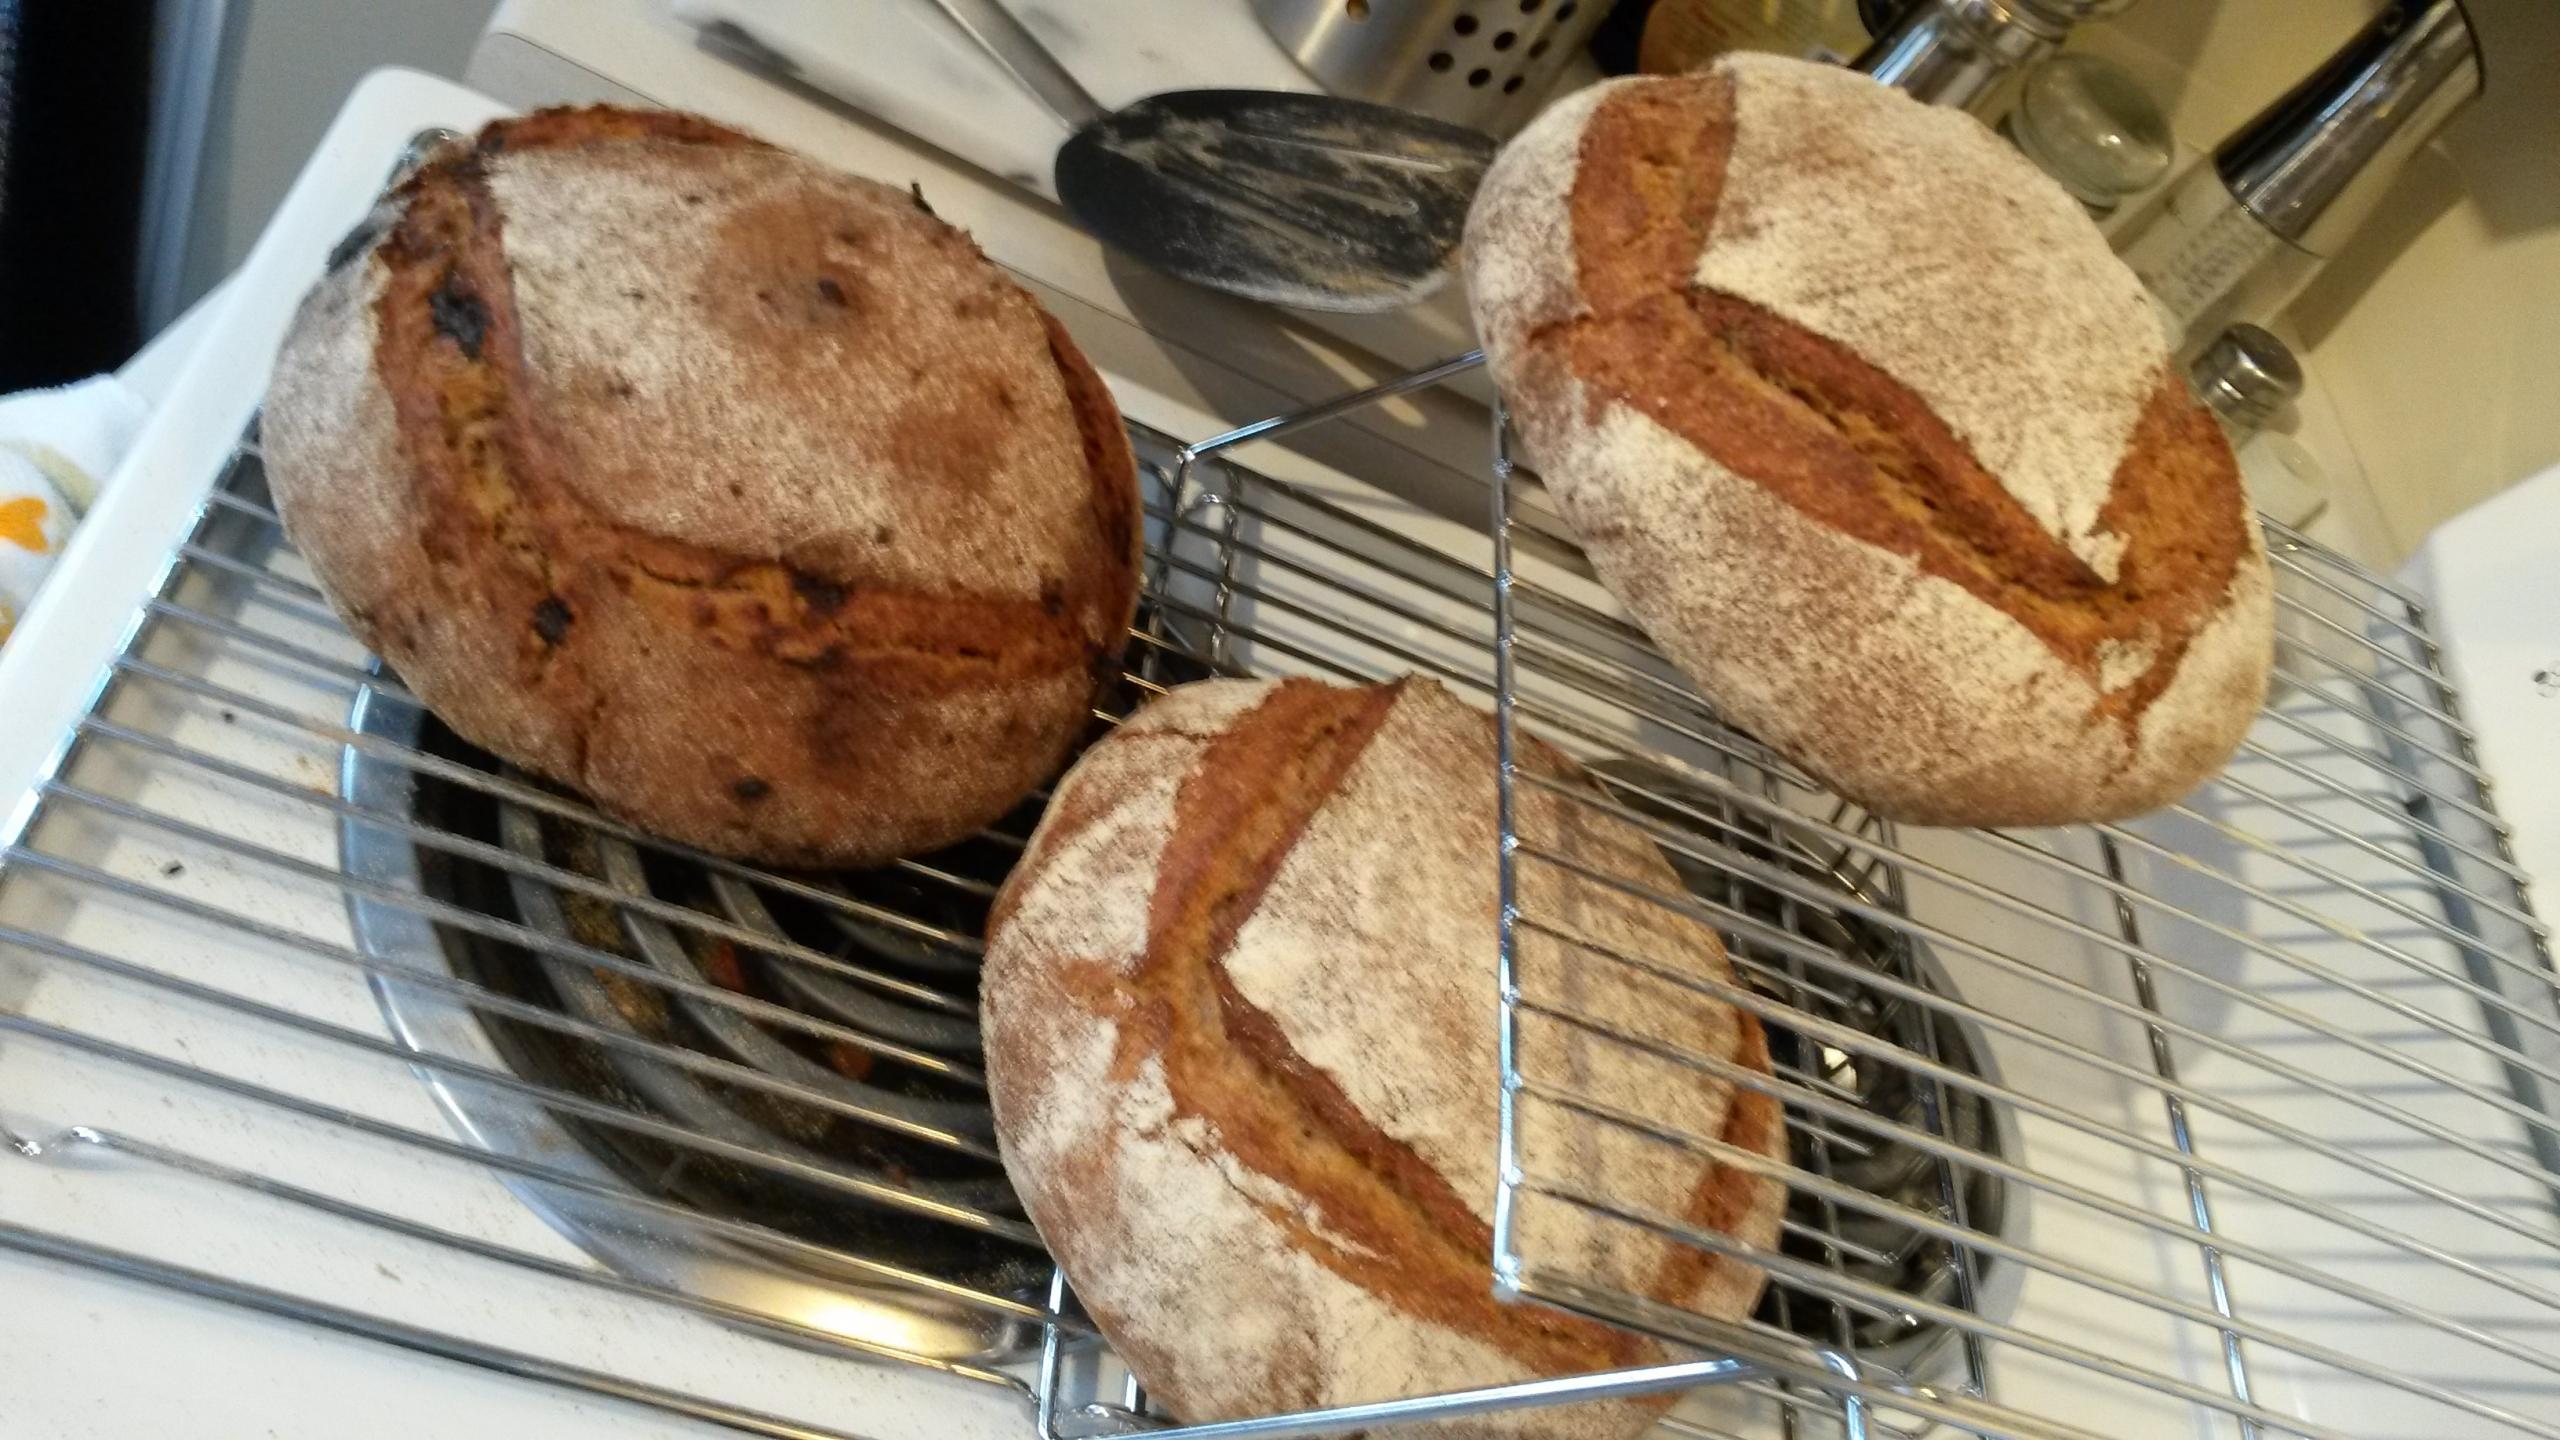 Sourdough breads